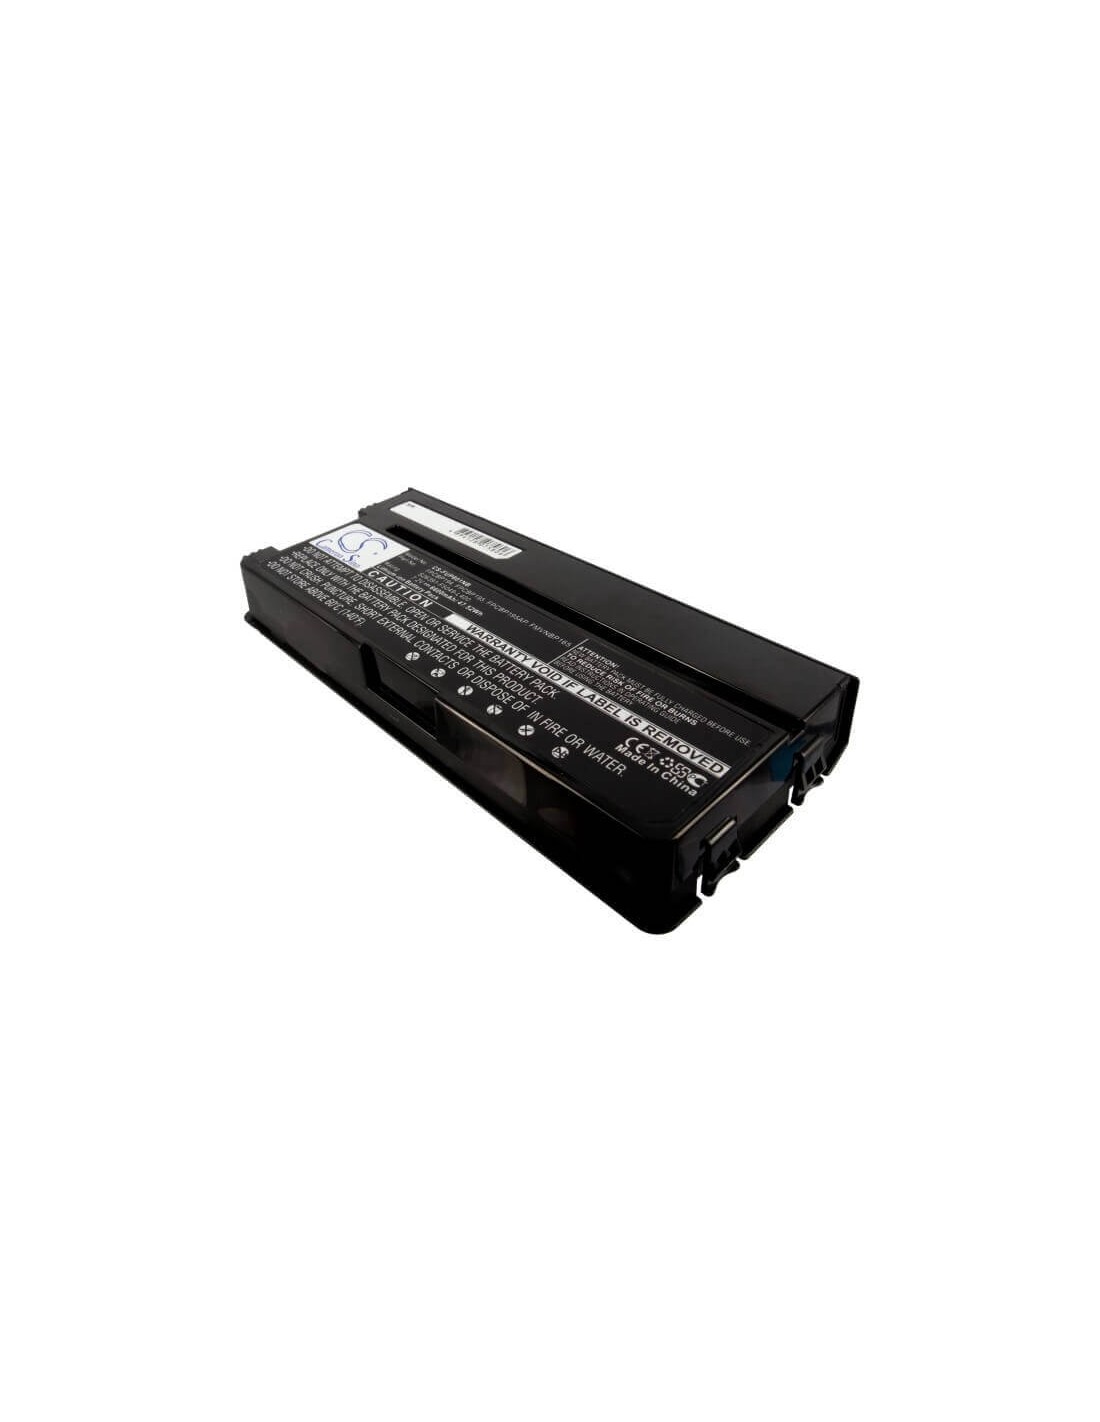 Black Battery for Fujitsu Lifebook P8010, Lifebook P8020 7.2V, 6600mAh - 47.52Wh